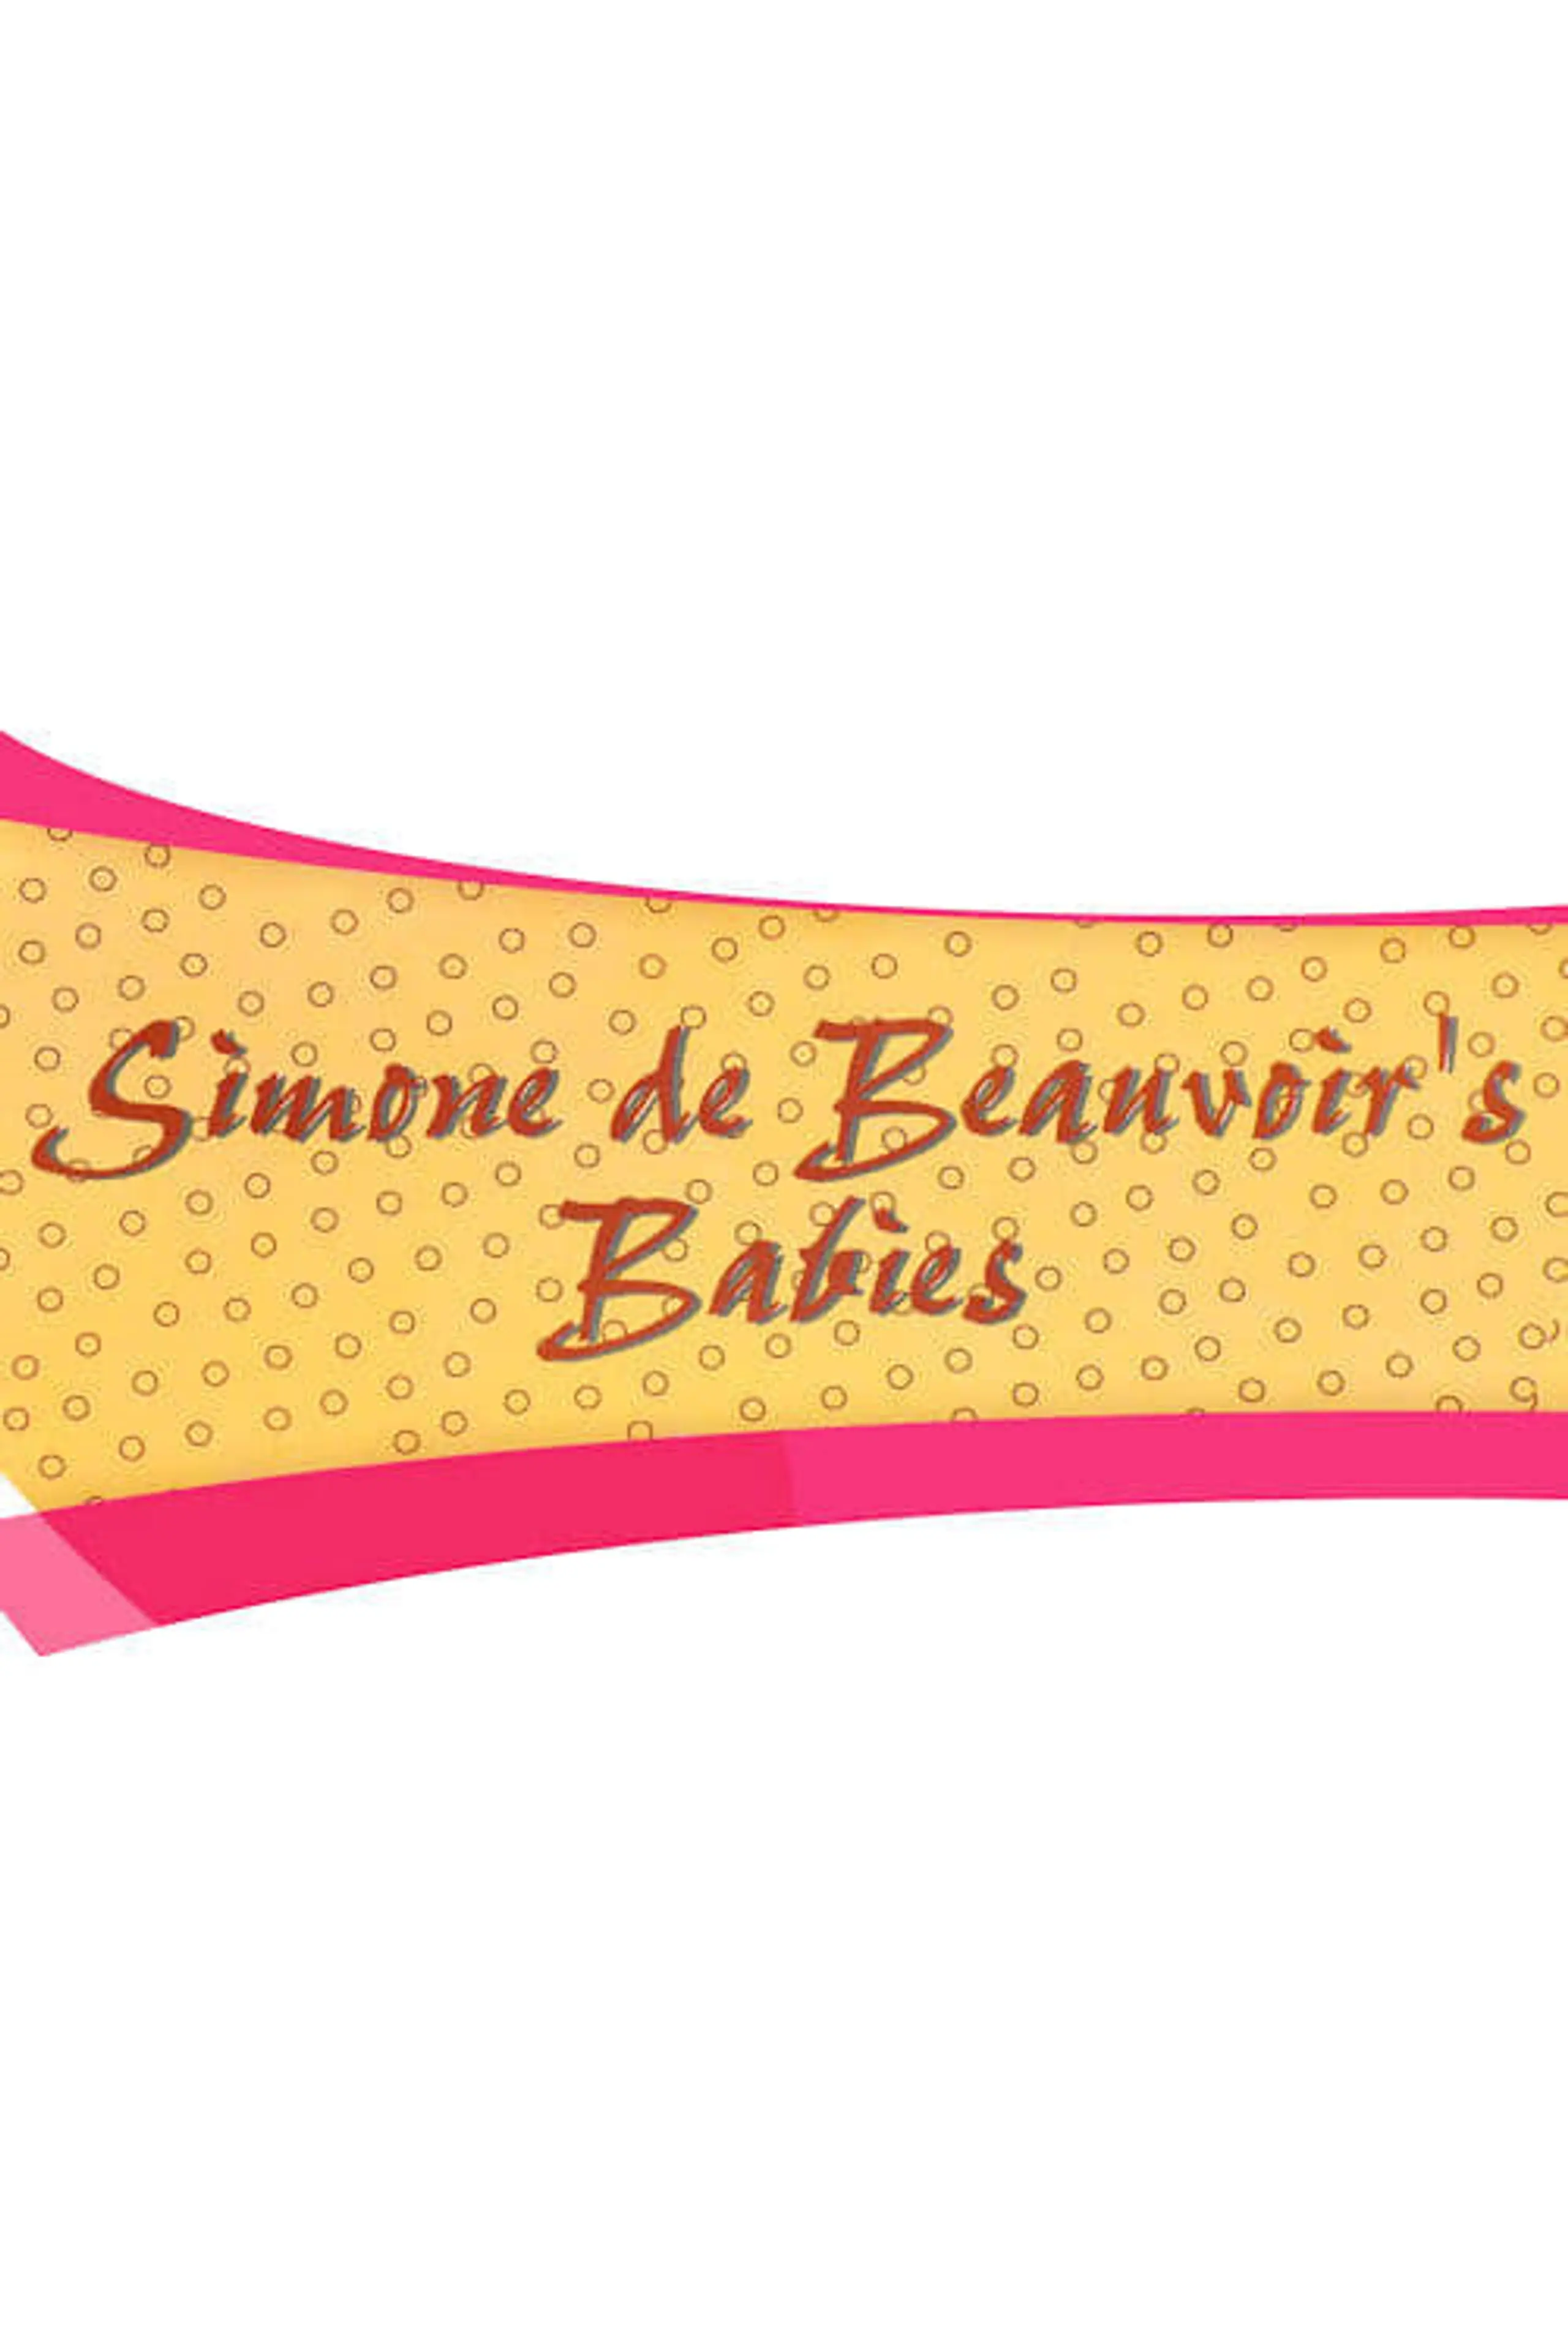 Simone de Beauvoir's Babies